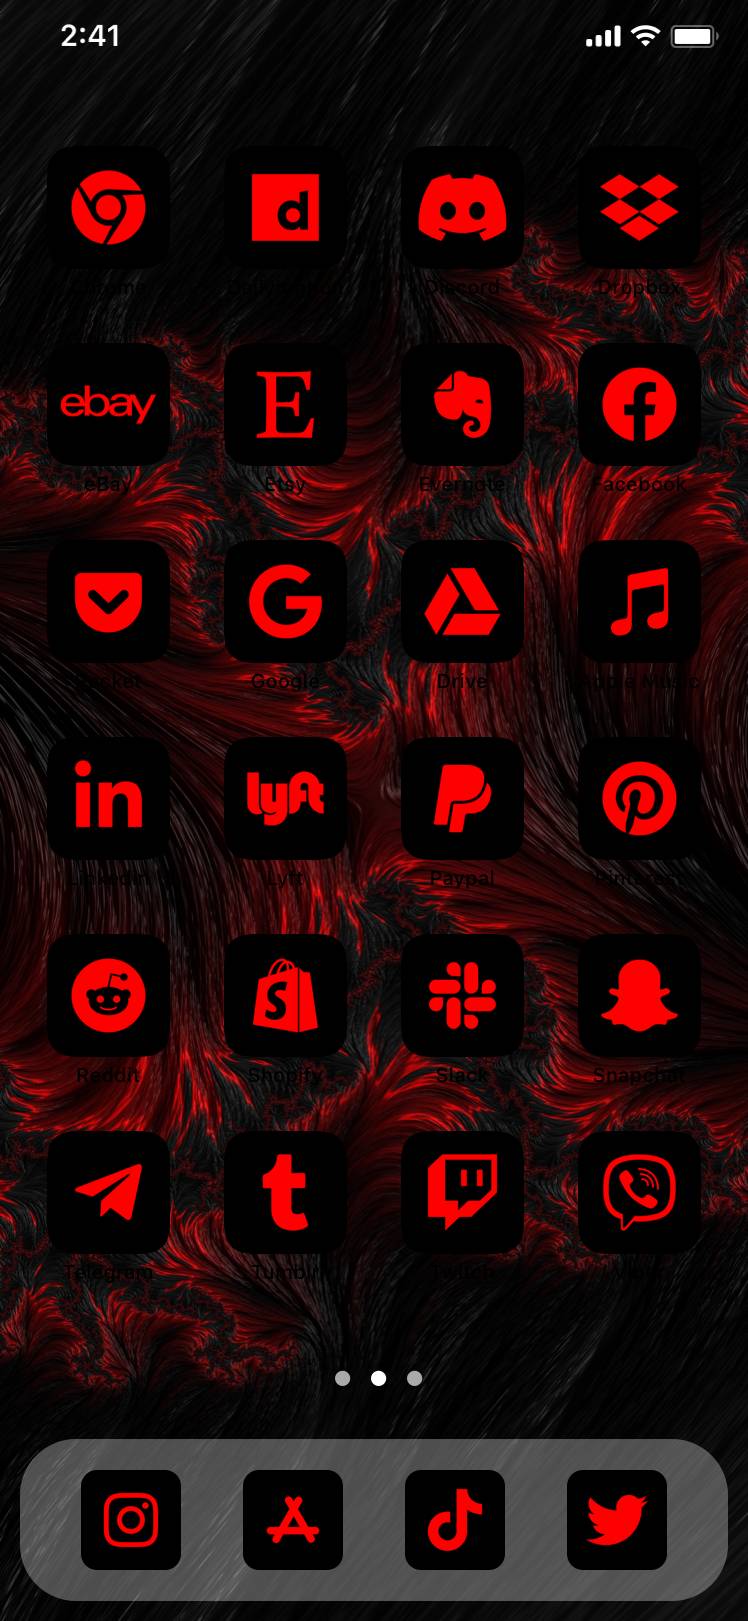 red theme packИдеје за почетни екран[JREJDToCfRaswAOMz3bv]